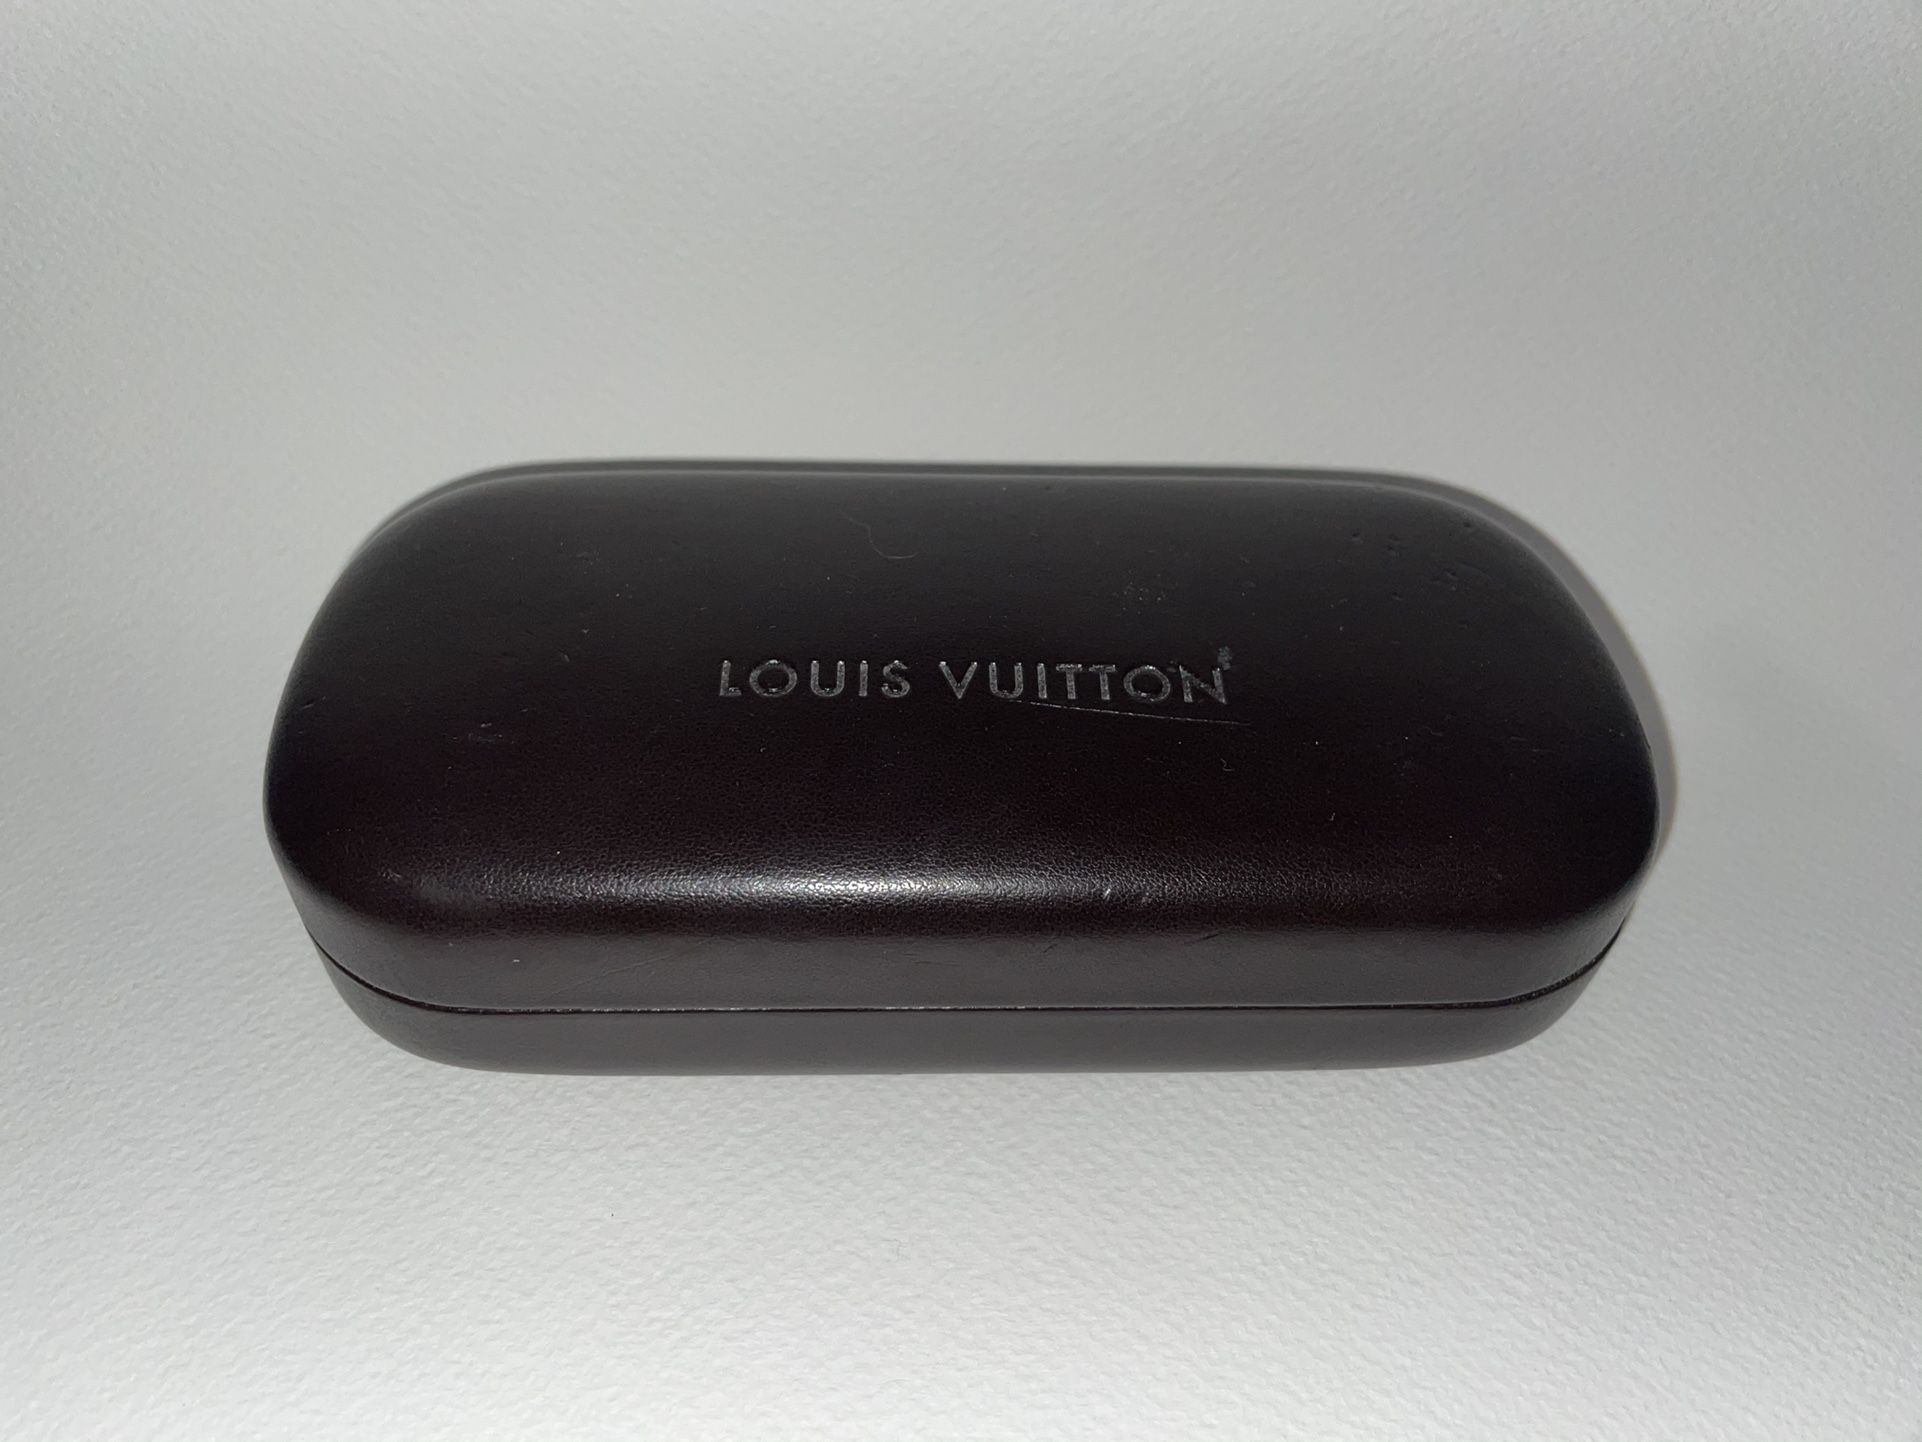 LOUIS VUITTON Z0368U White Acetate Frame Impulsion Sunglasses - The Purse  Ladies